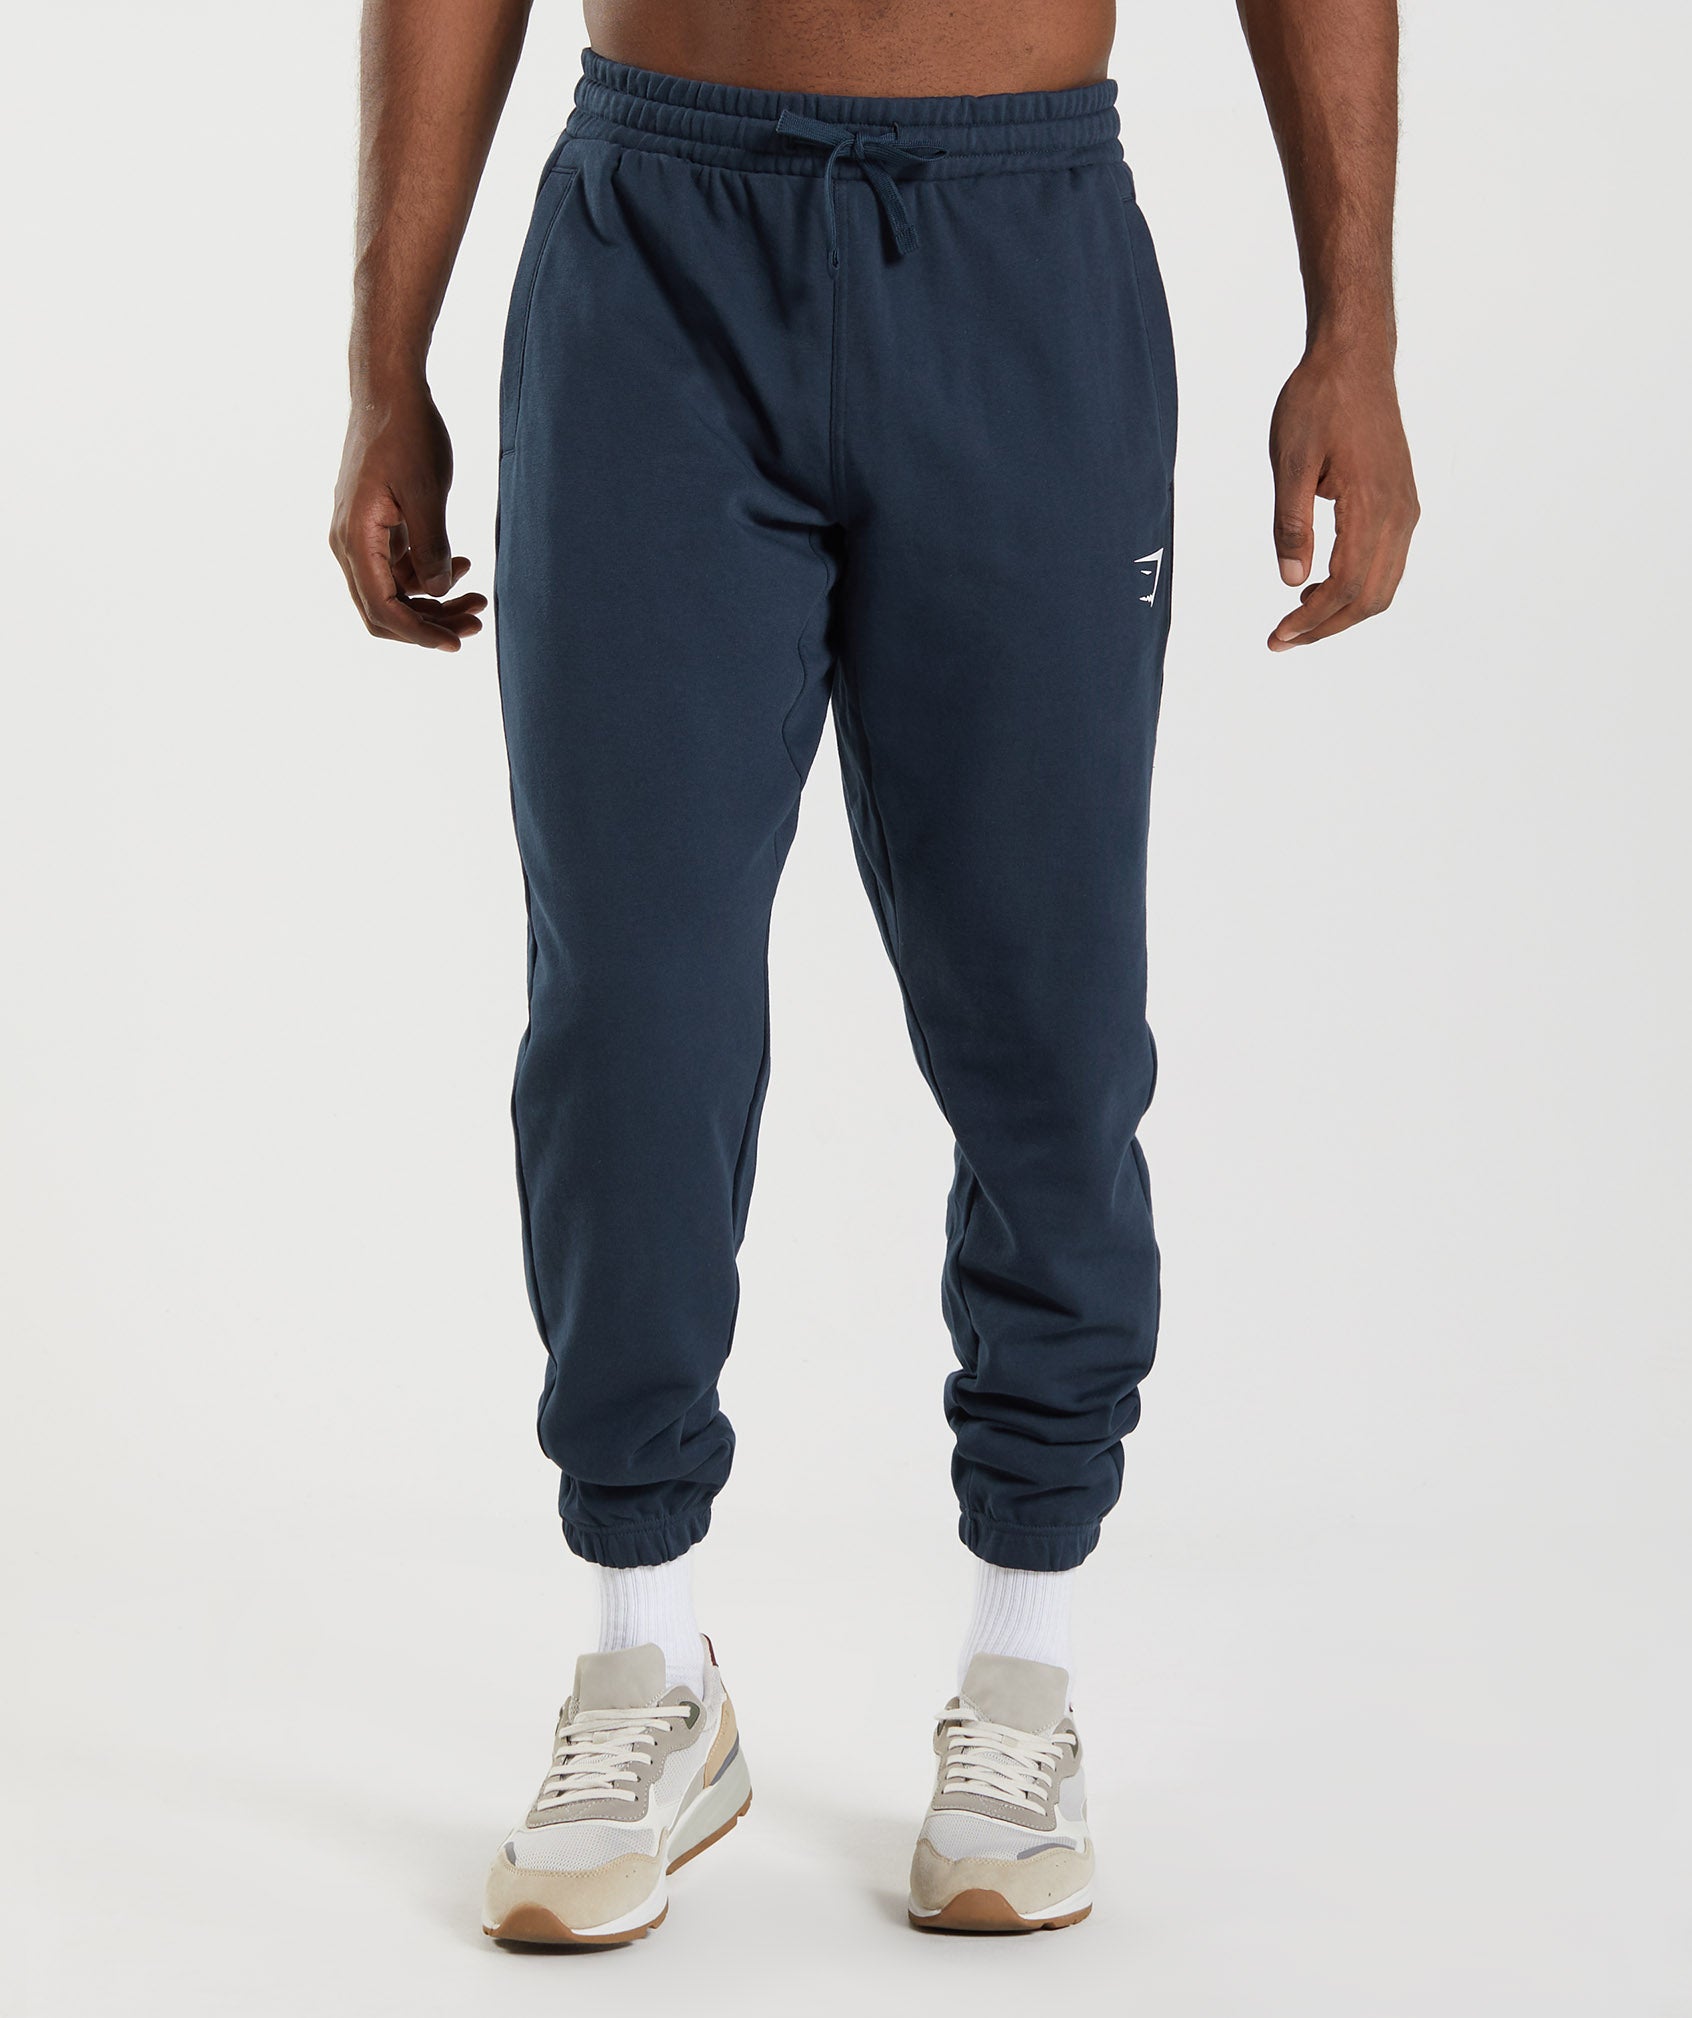 Gymshark Joggers Navy Blue Drawstring Pocket Sweatpants Men's